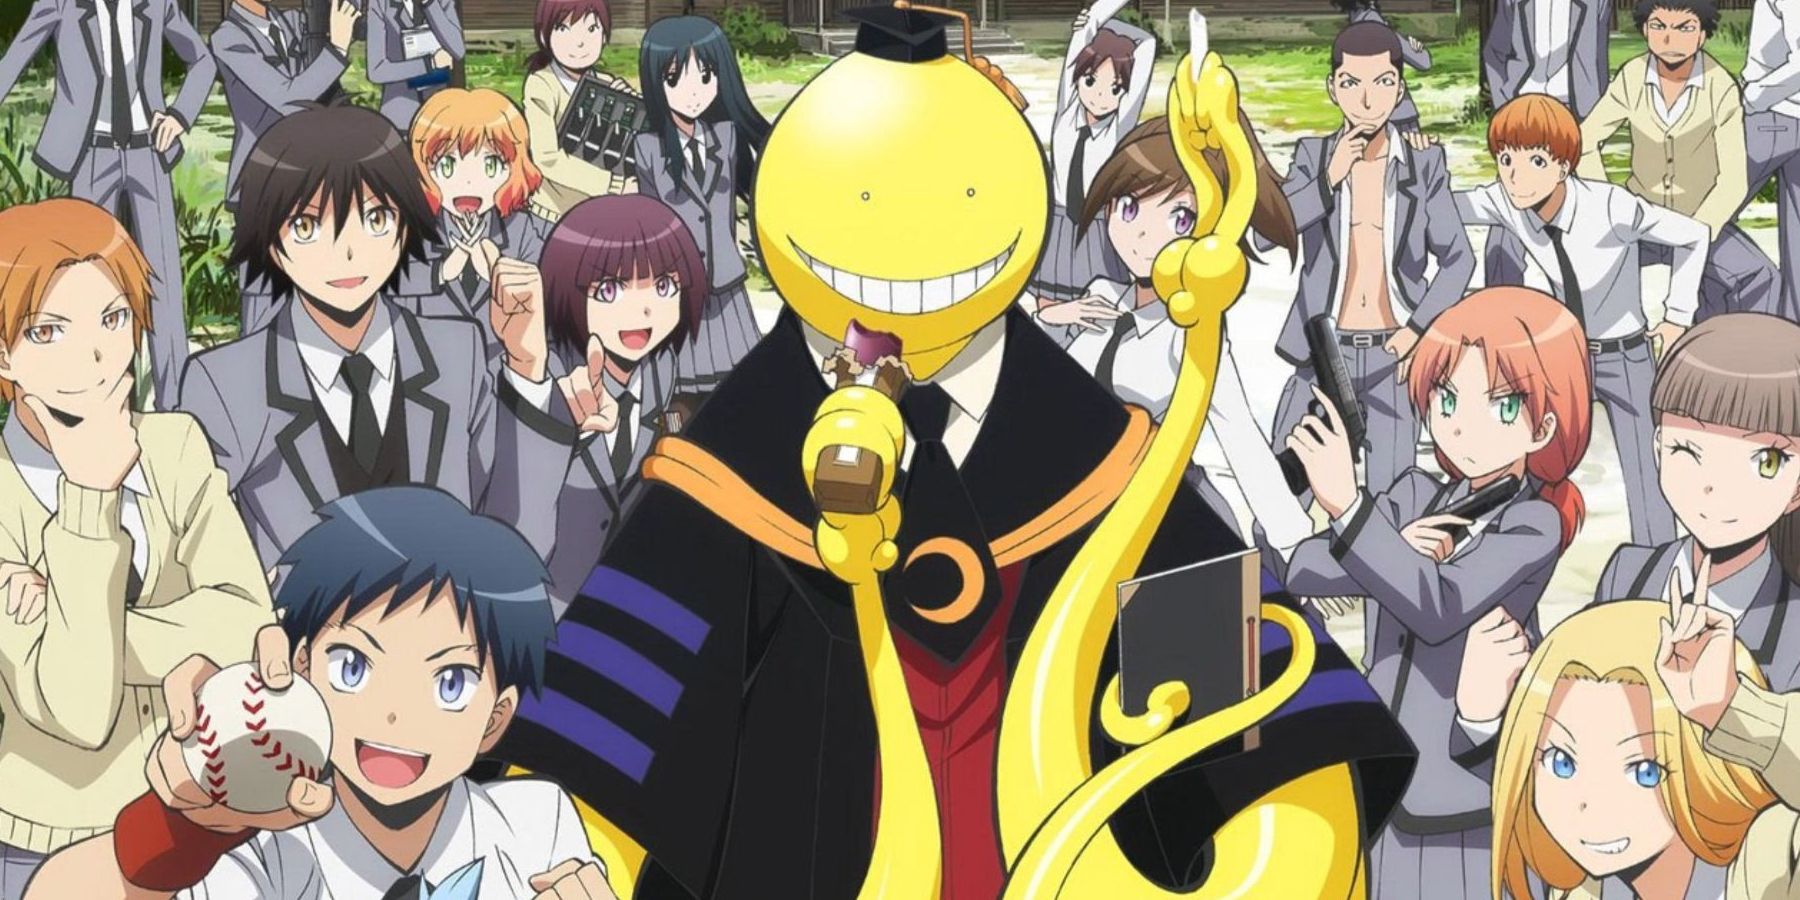 Assassination Classroom season 1 anime